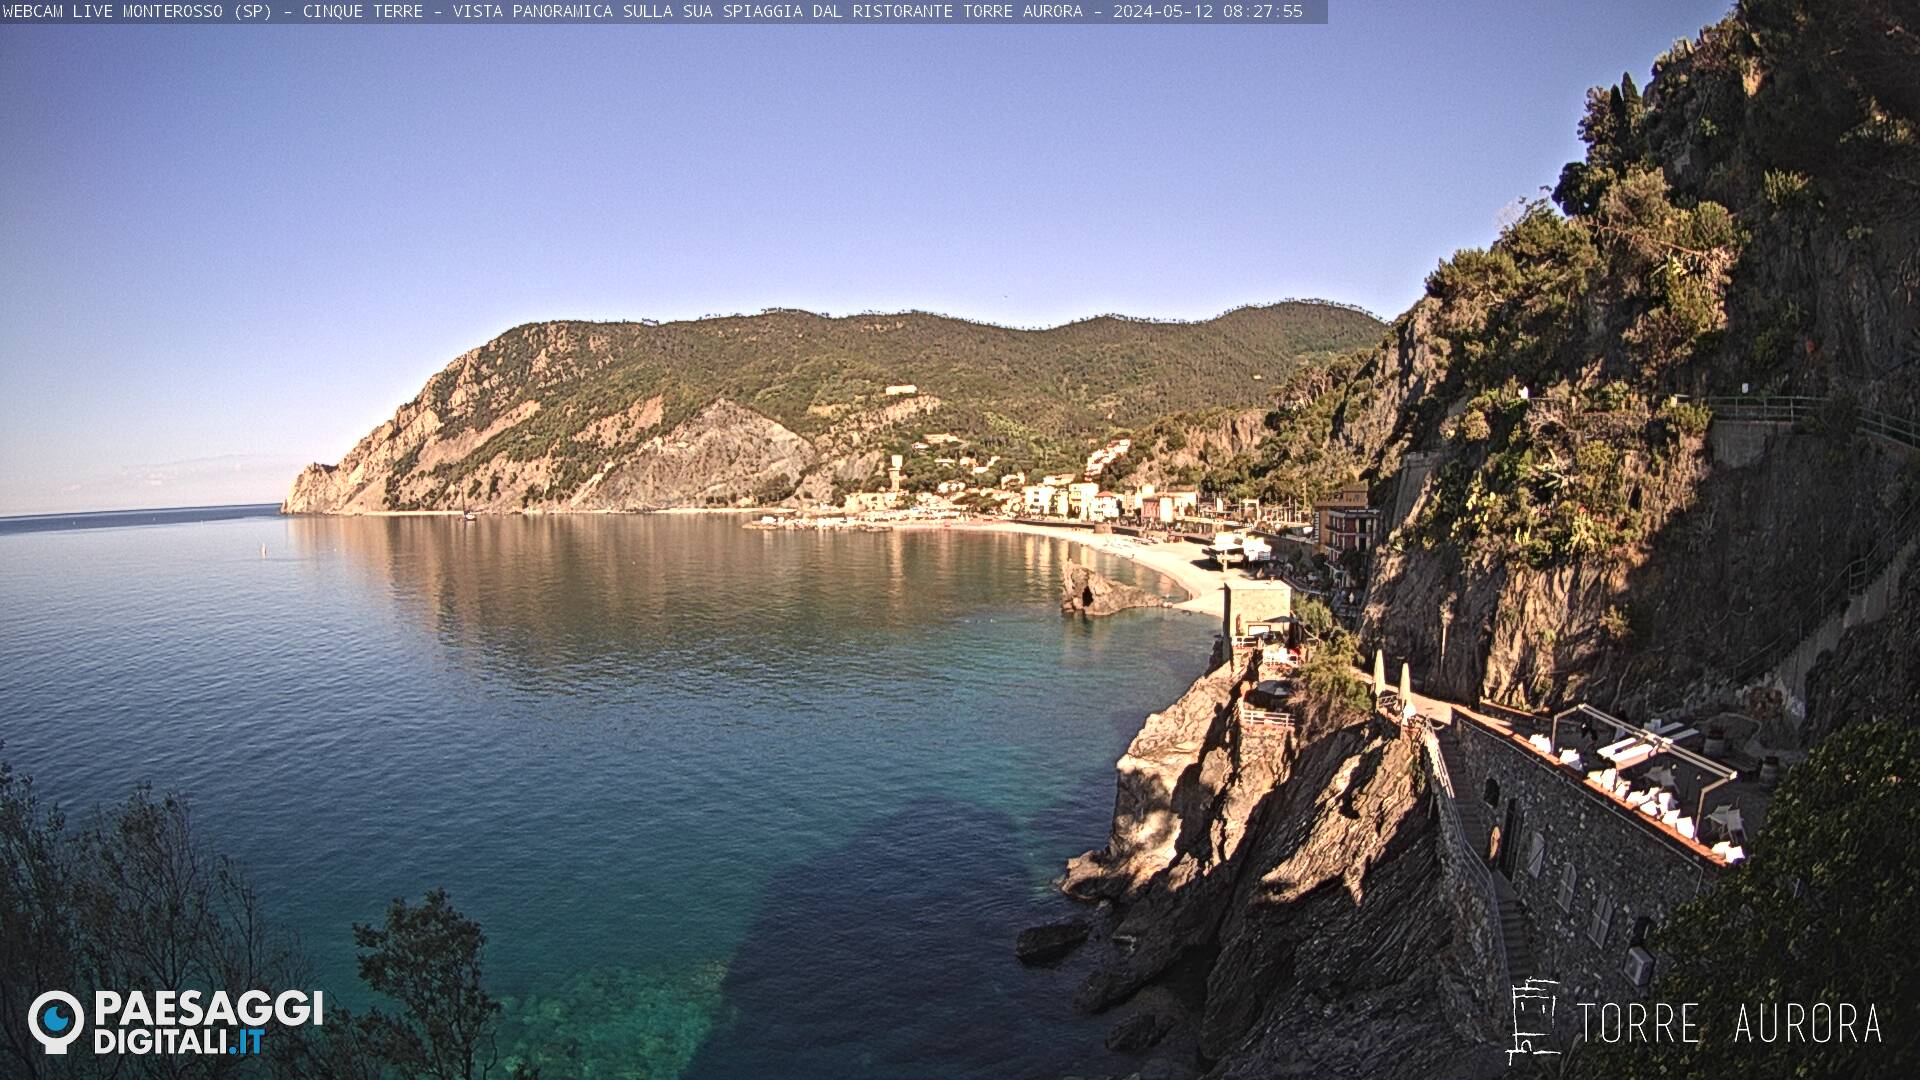 Monterosso al Mare (Cinque Terre) Jue. 08:28